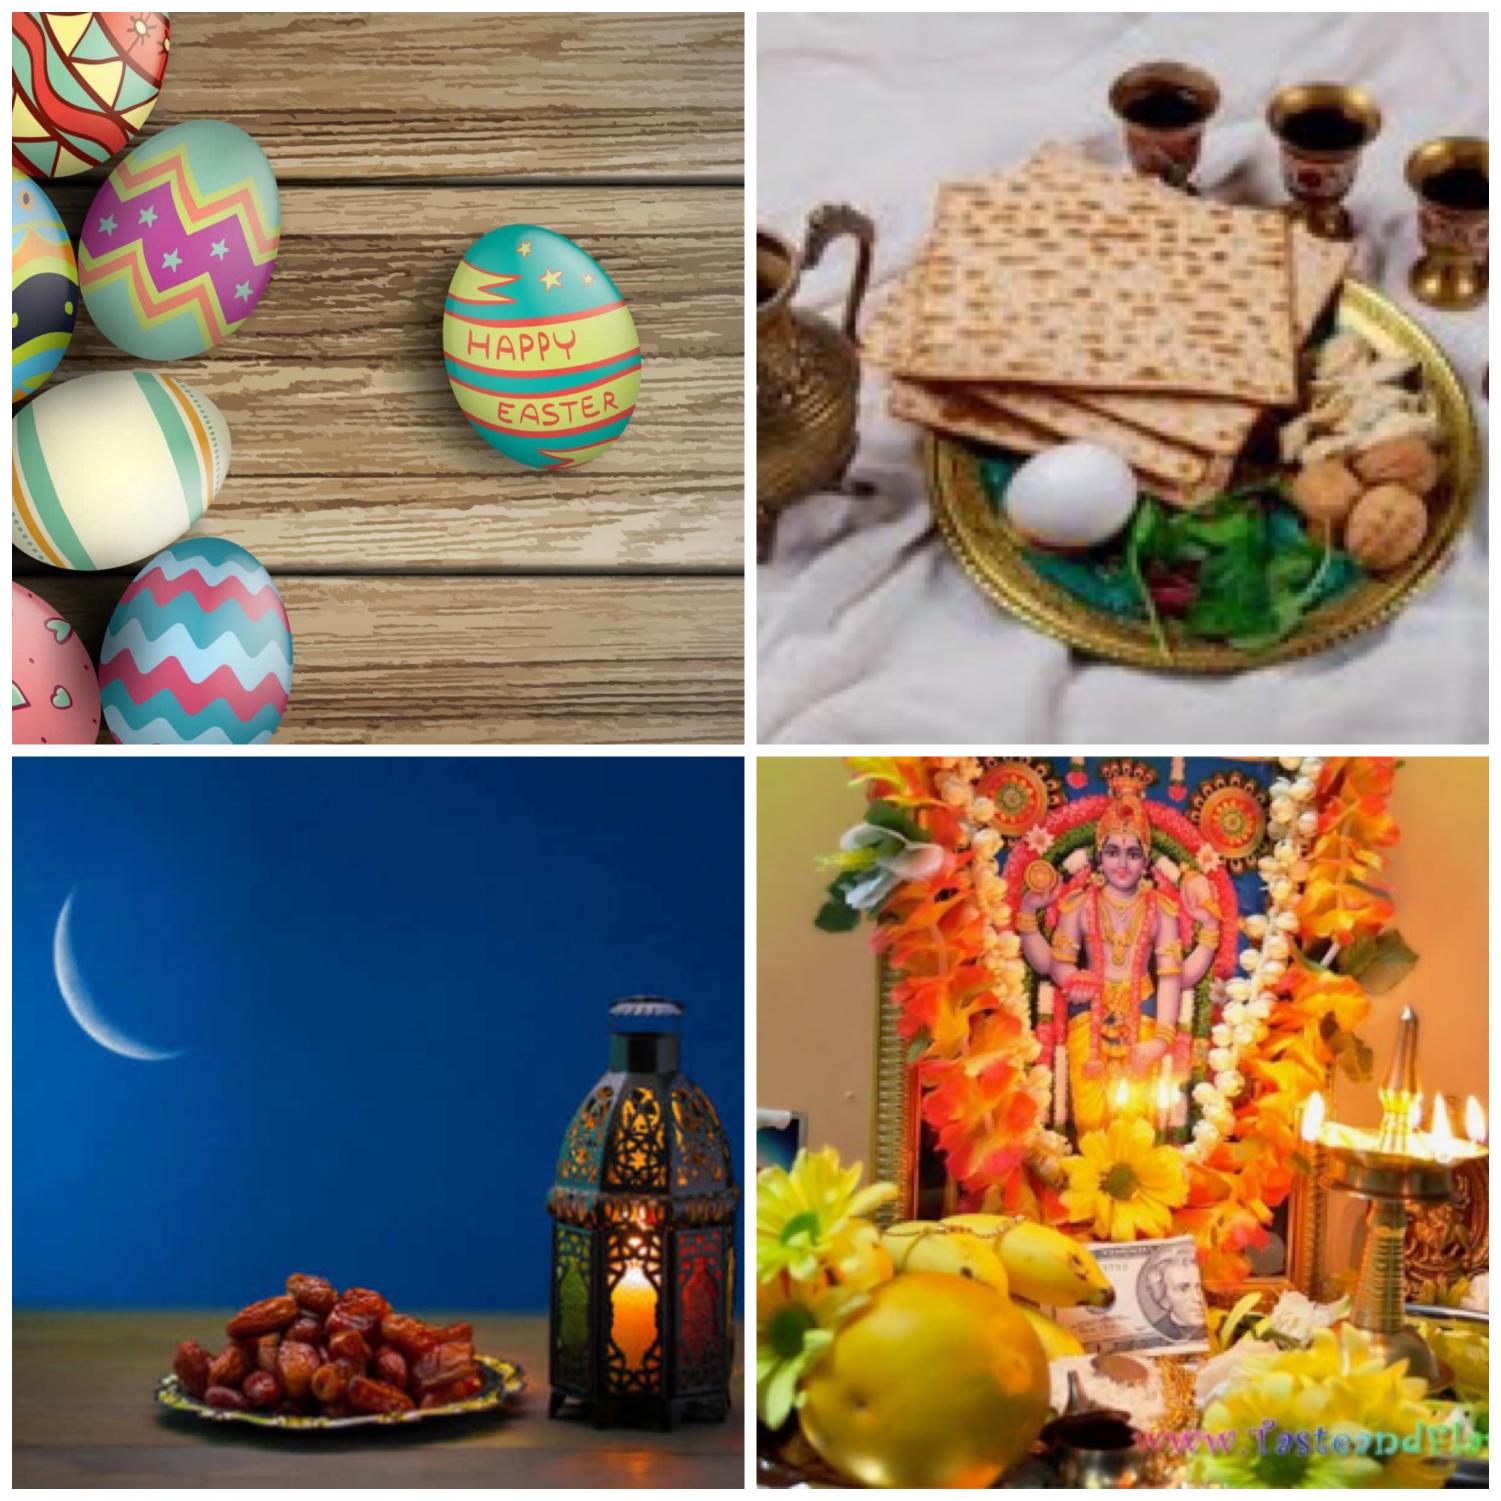 Holidays of April Easter, Passover, Ramadan, and Vishu Baisakhi